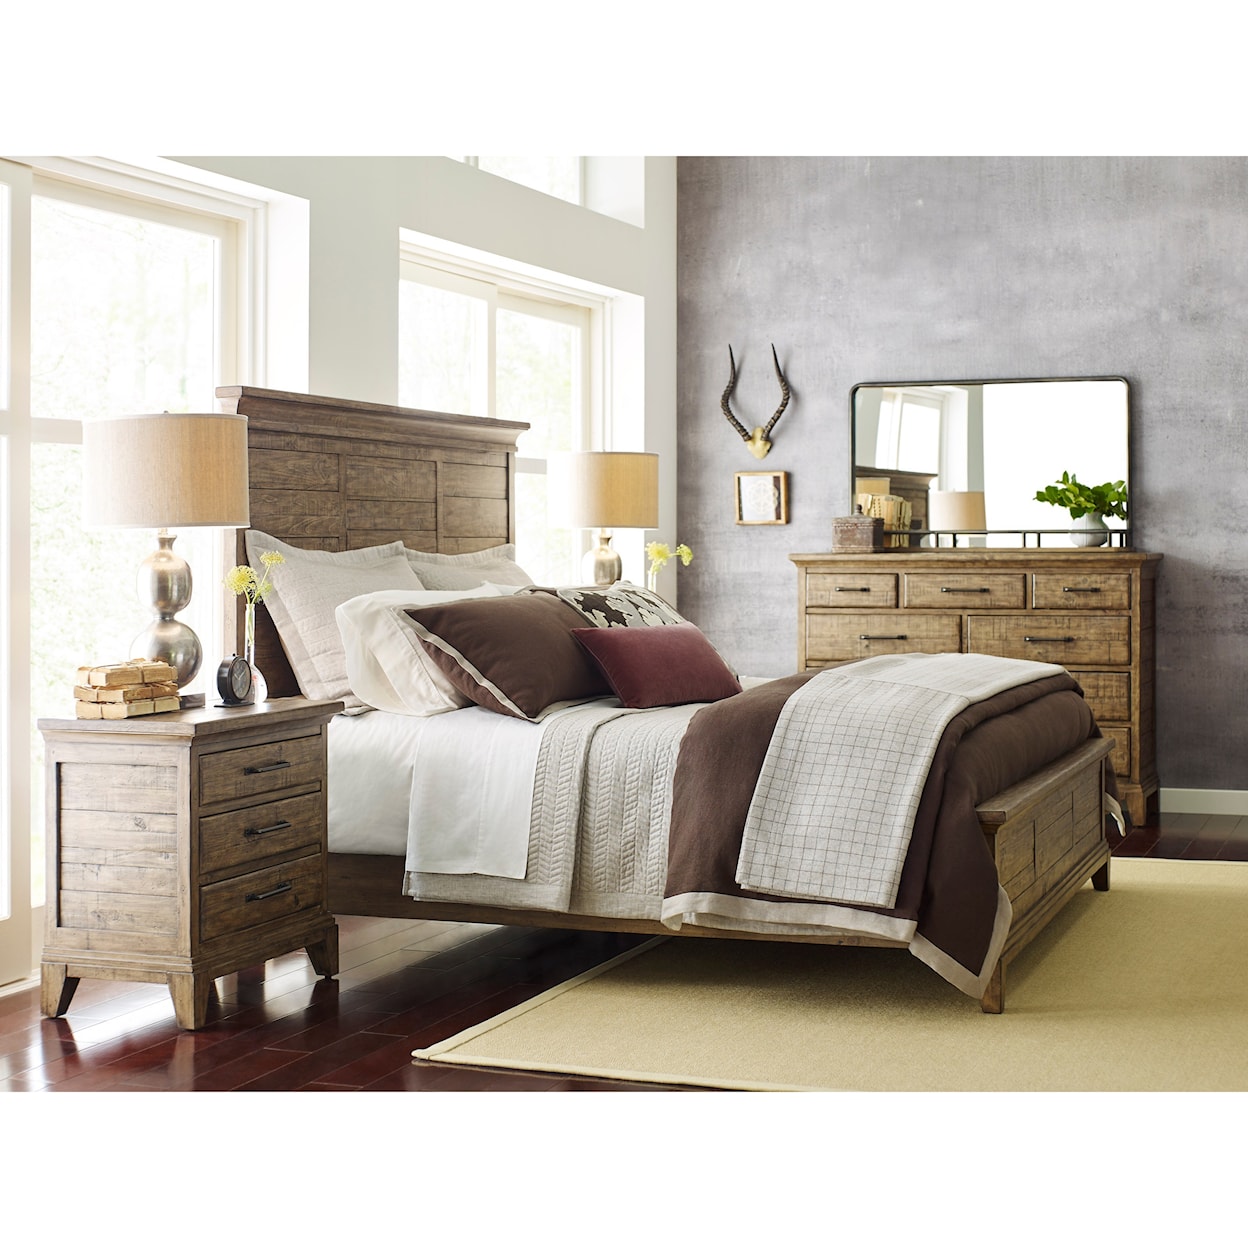 Kincaid Furniture Plank Road California King Bedroom Group